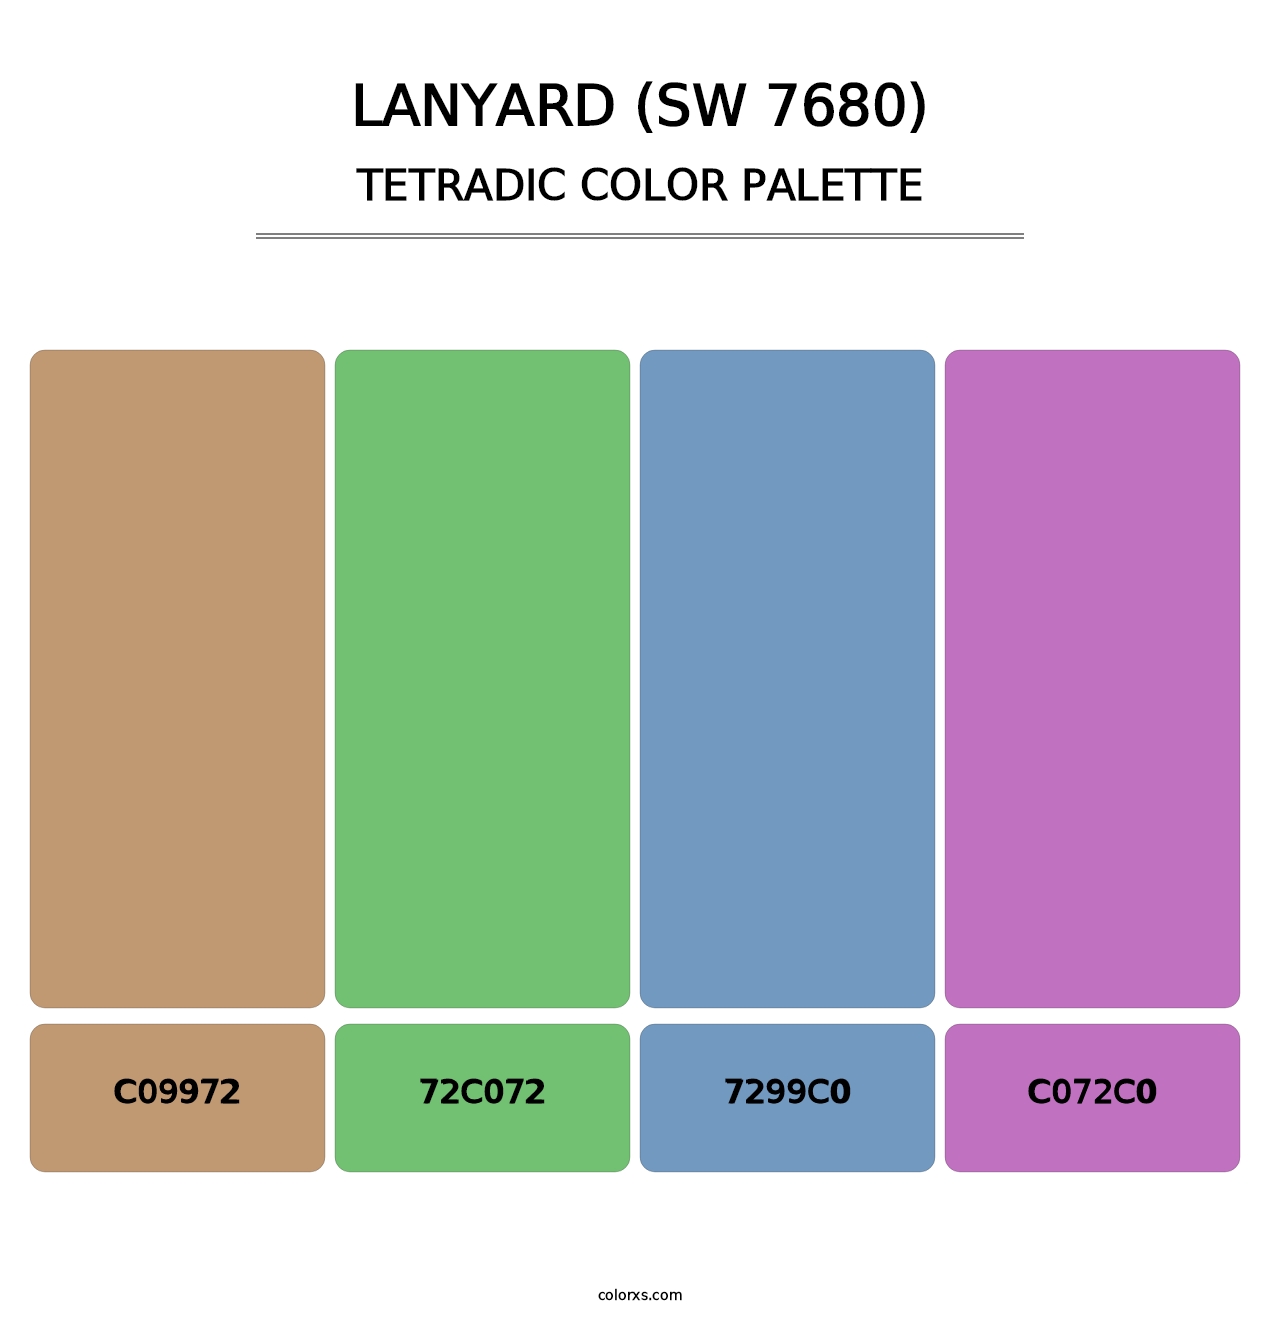 Lanyard (SW 7680) - Tetradic Color Palette